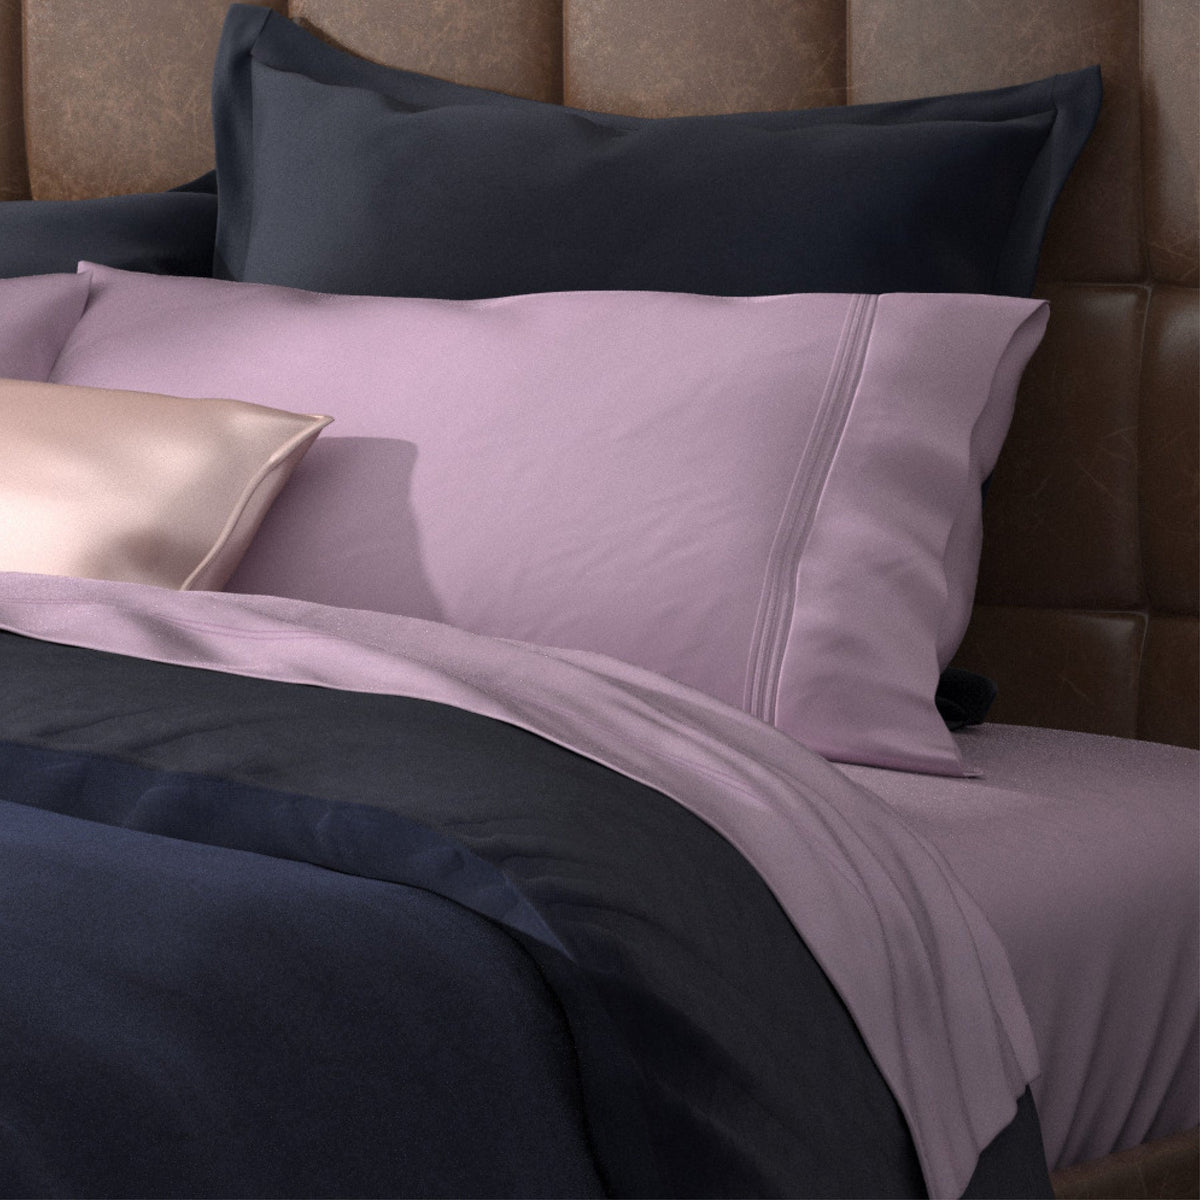 PureCare® Pure Silk Pillowcase   Sleep Better Guarantee